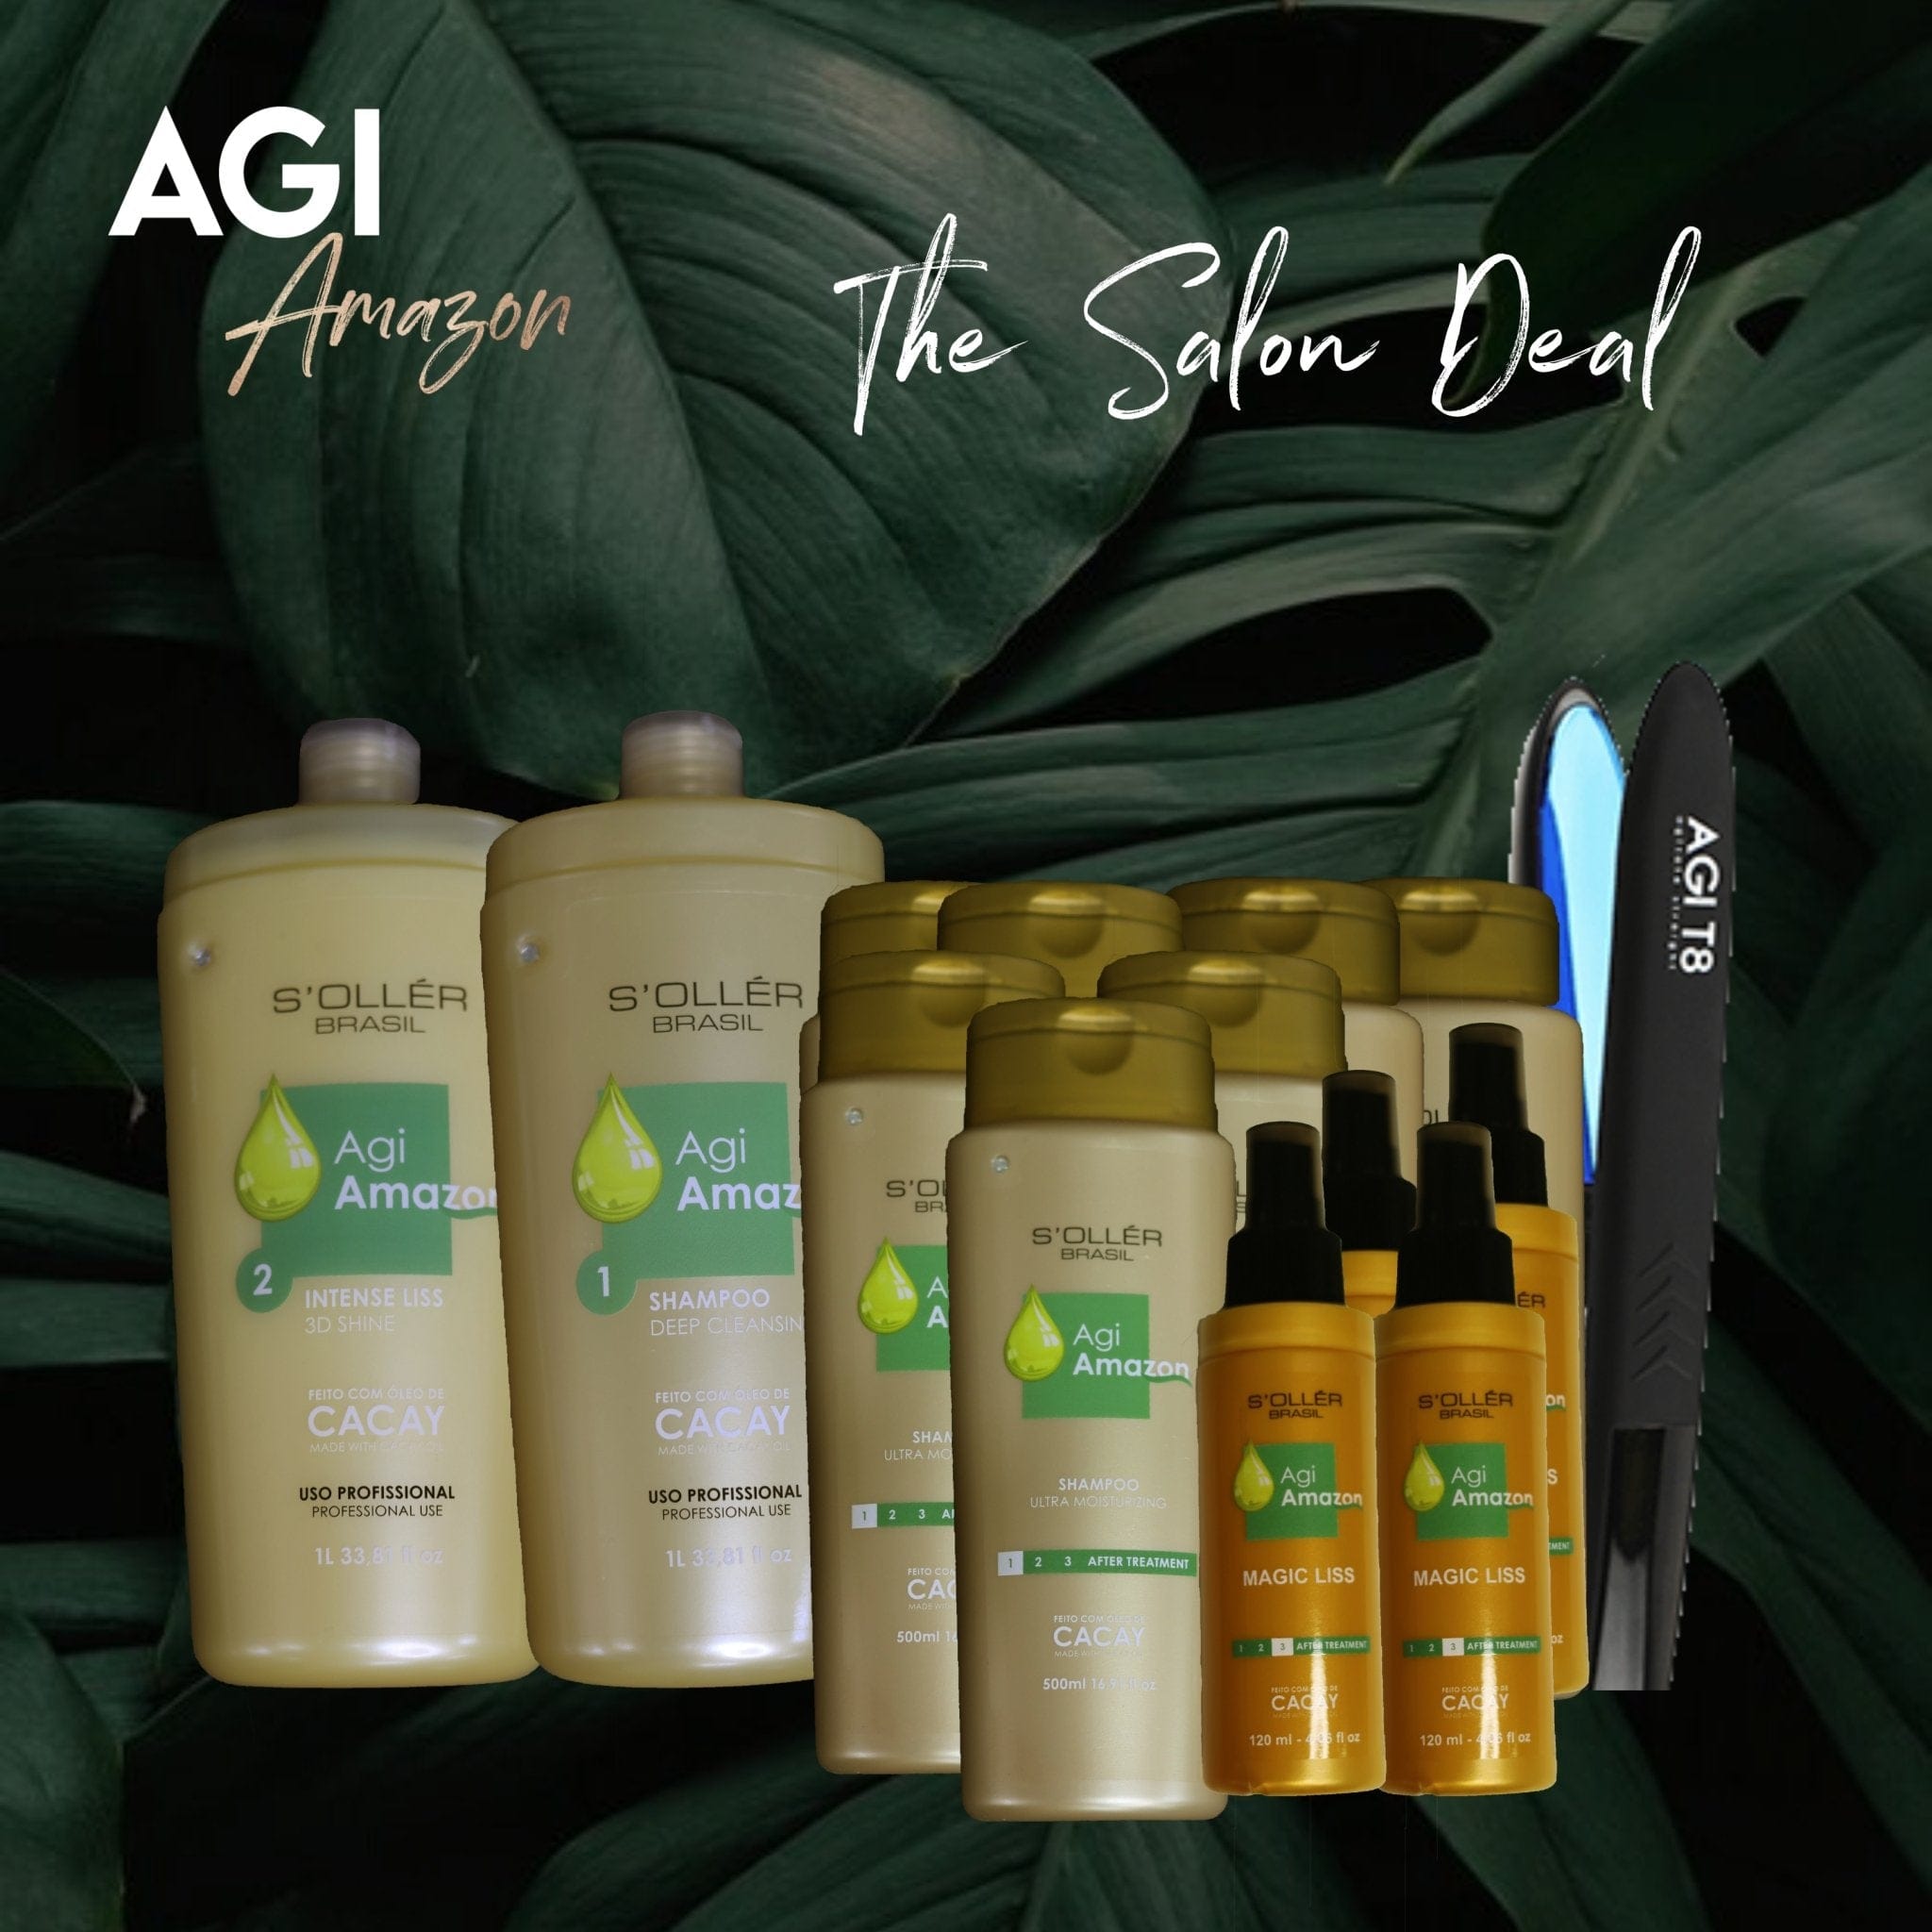 AGI Amazon - The Salon Deal.